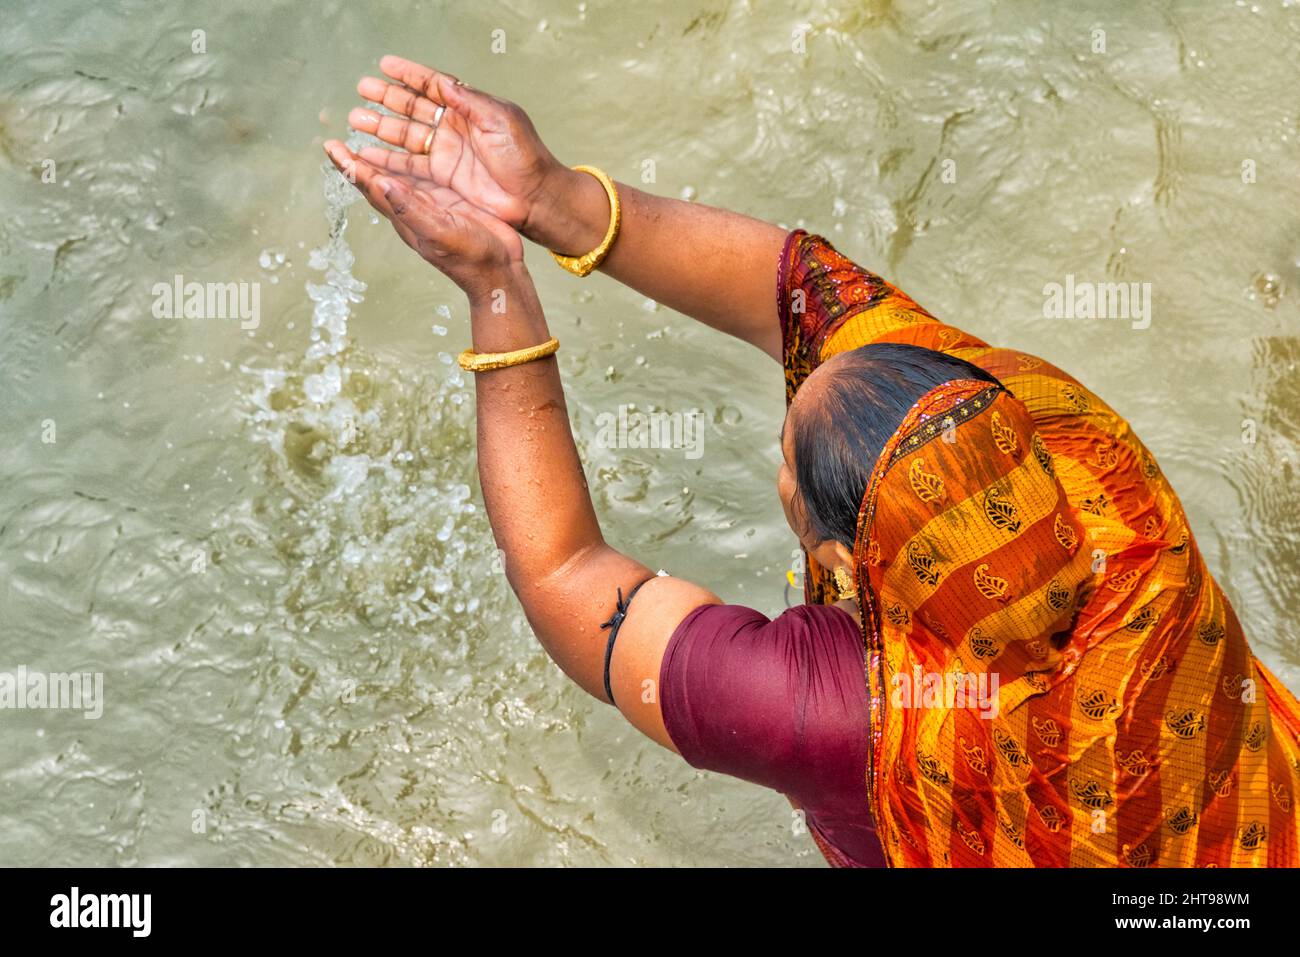 Femme en train de se baigner sainement dans le Gange River, Kolkata, Bengale occidental, Inde Banque D'Images